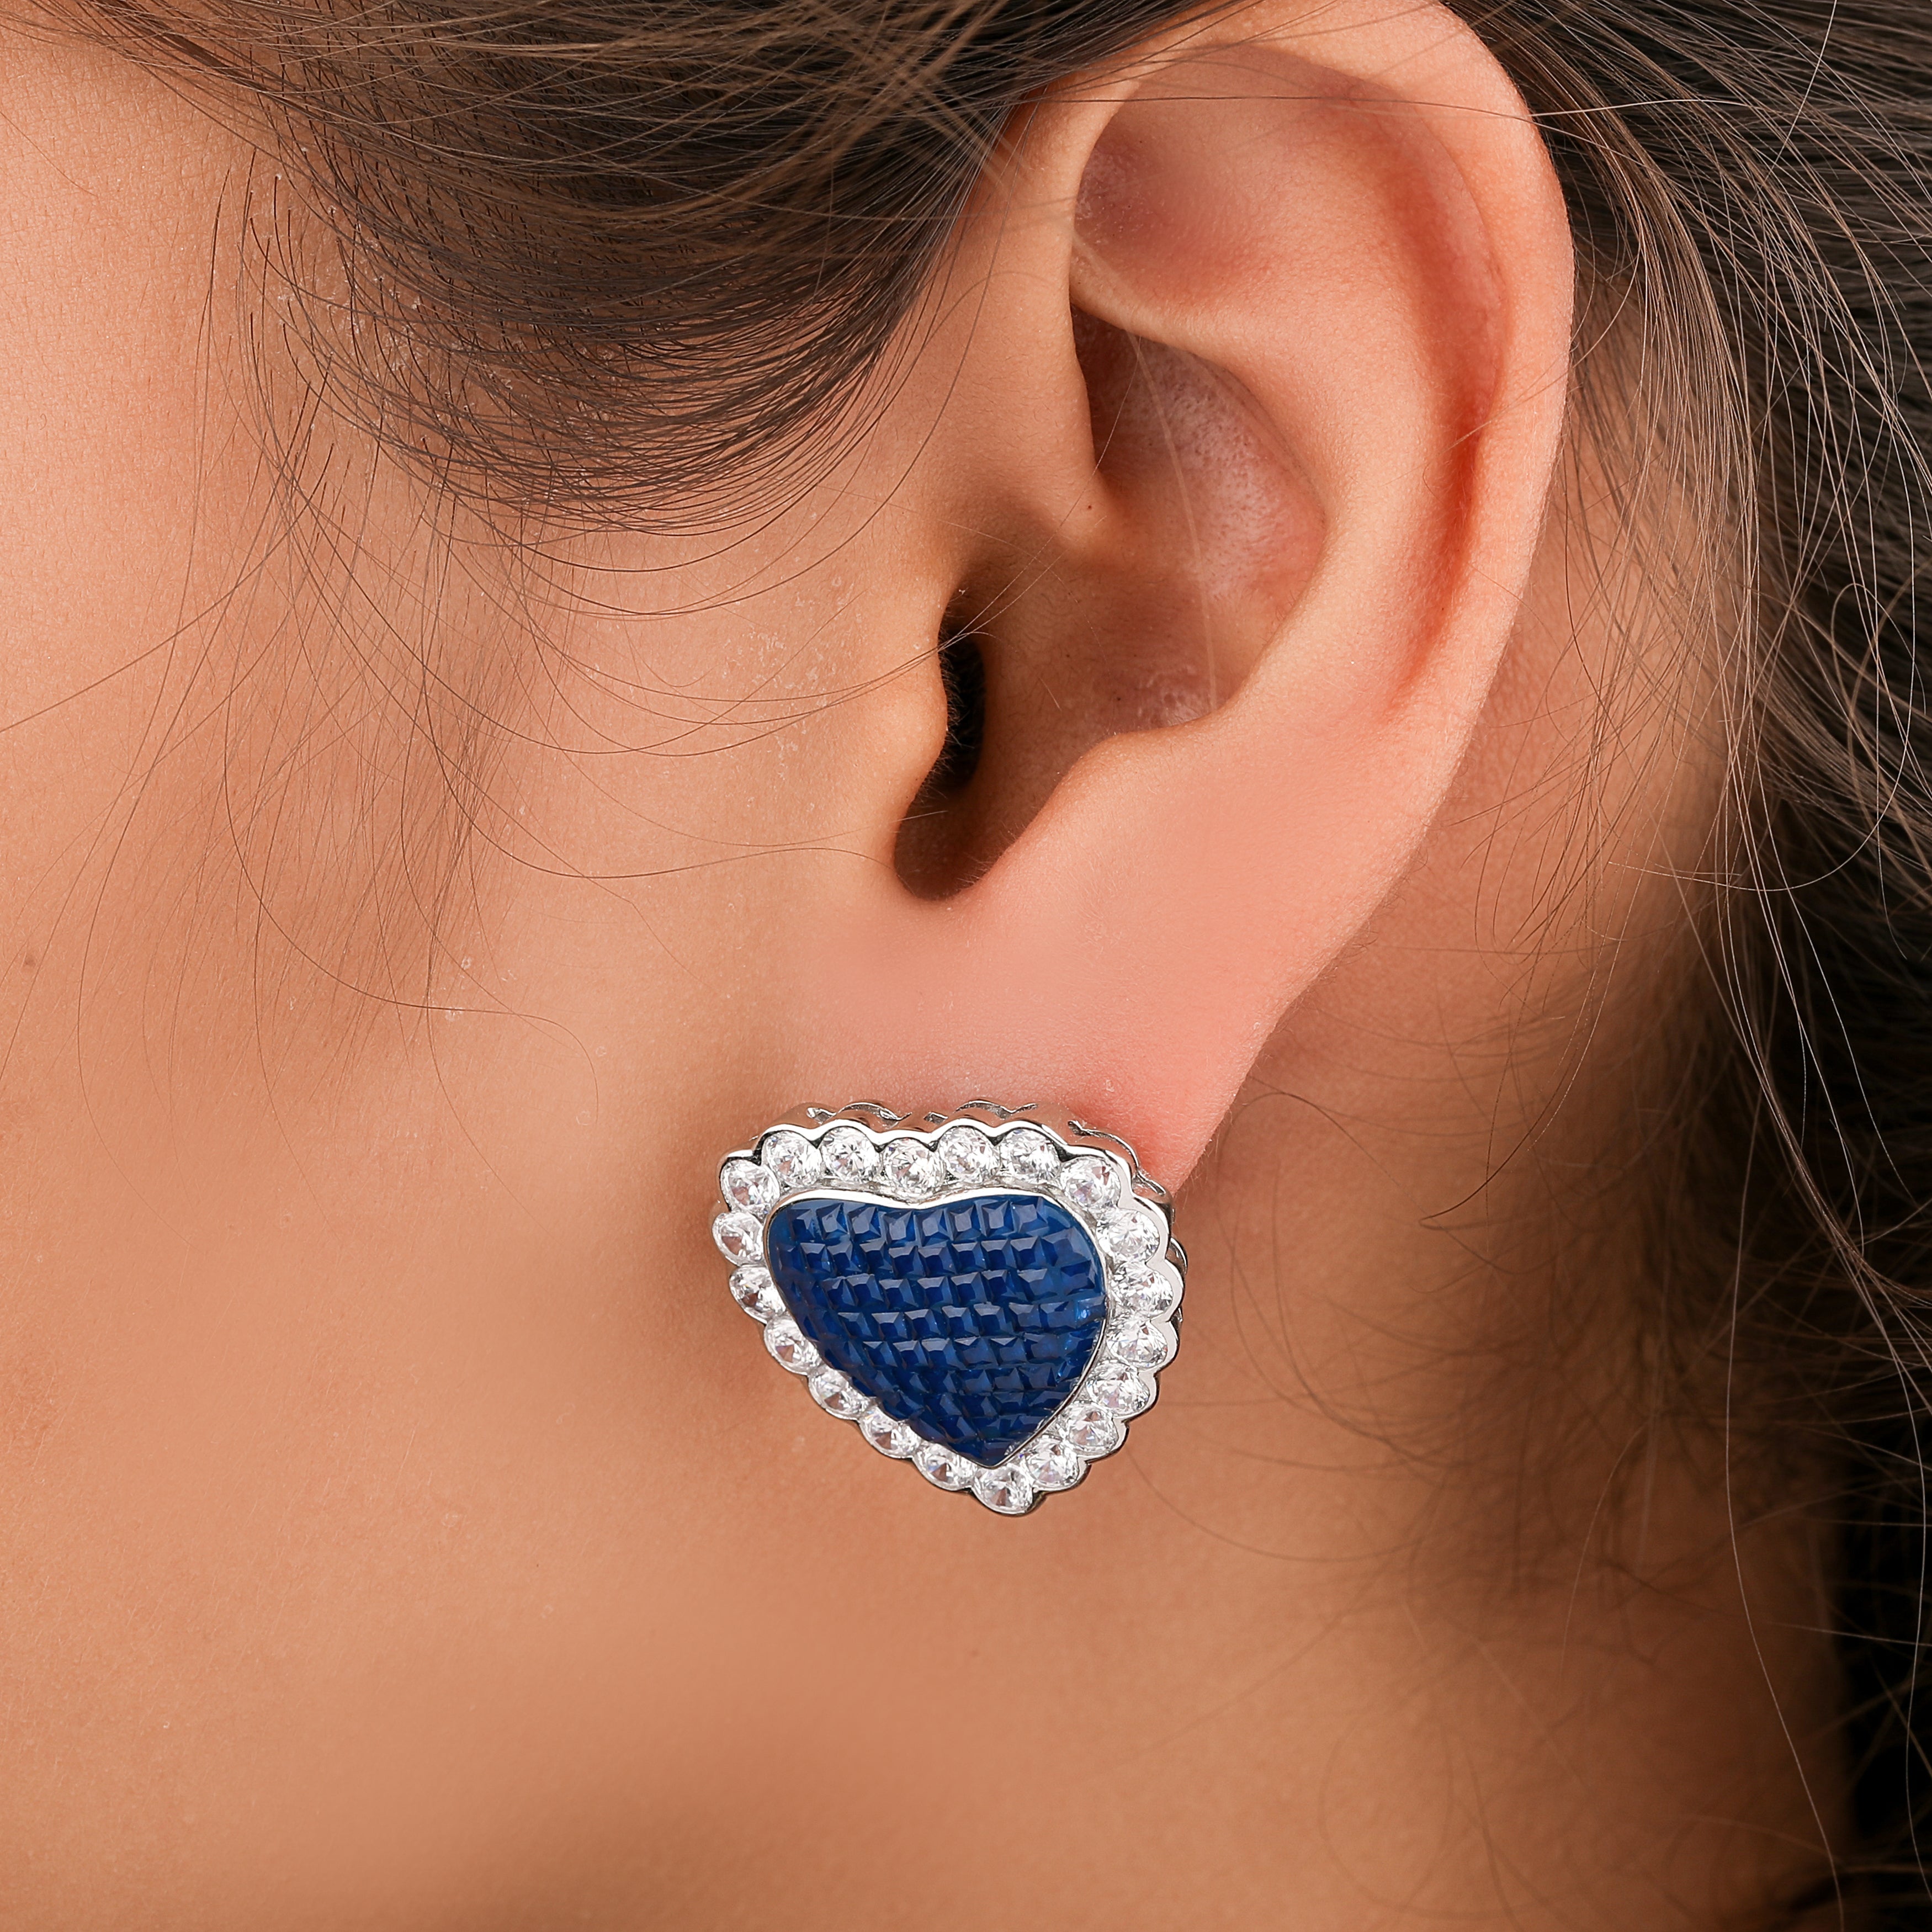 Natural blue sapphire heart pendant necklace gold